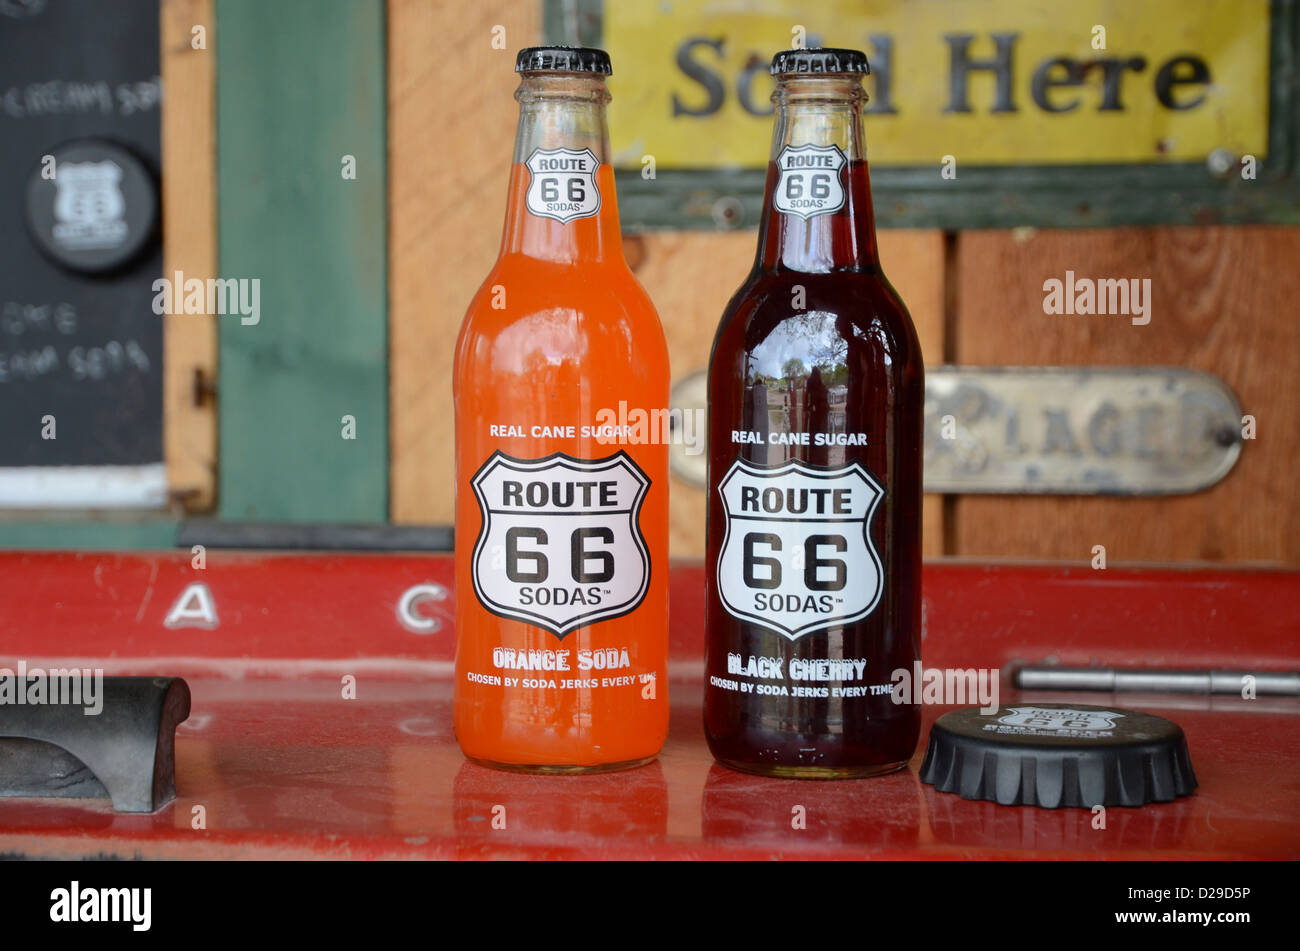 Route 66 soda bottles Stock Photo